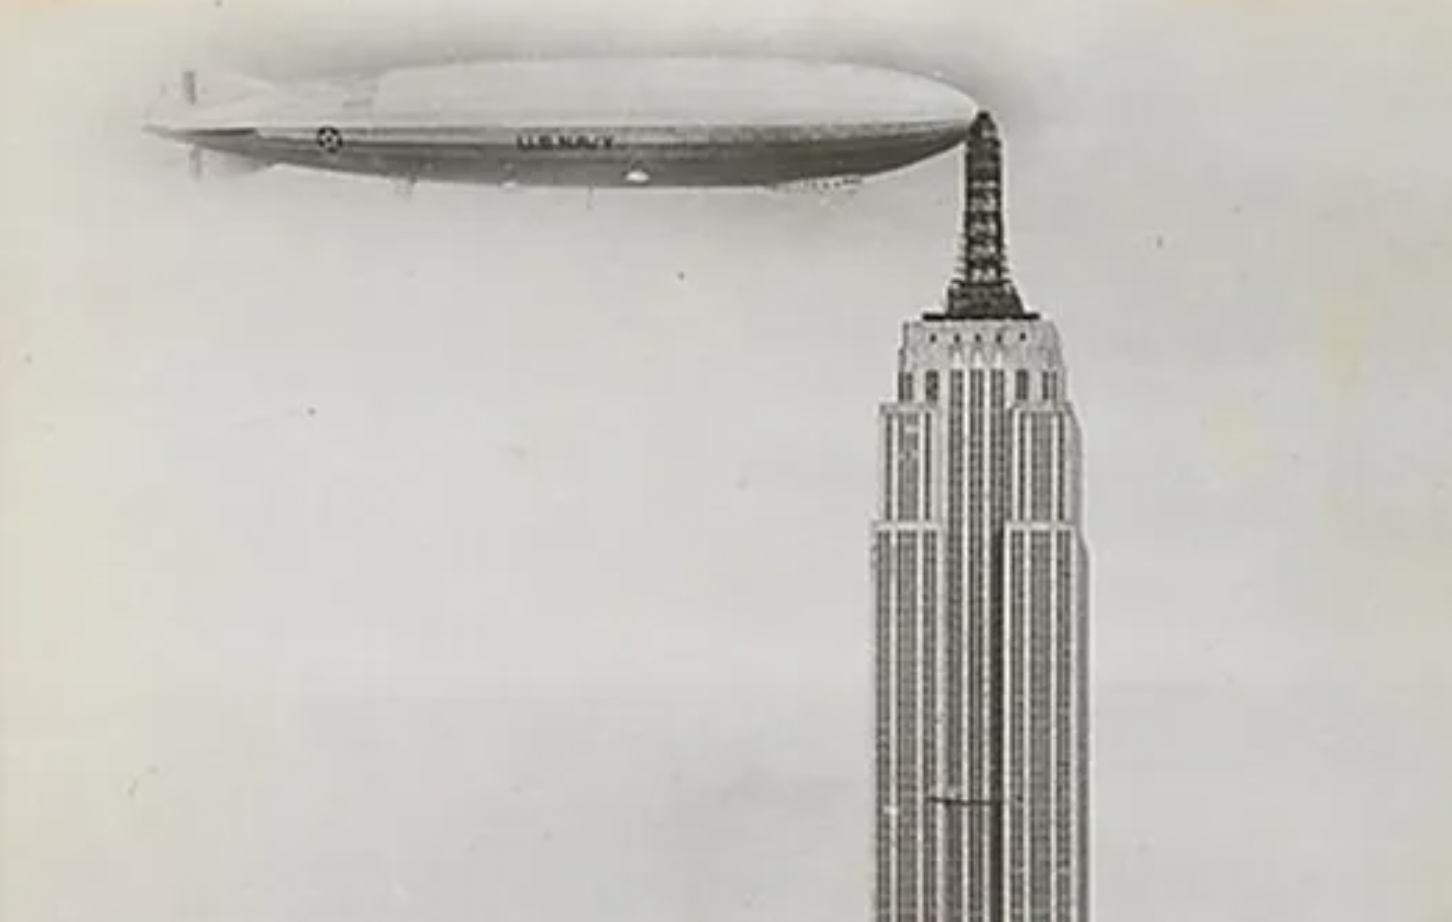 rigid airship